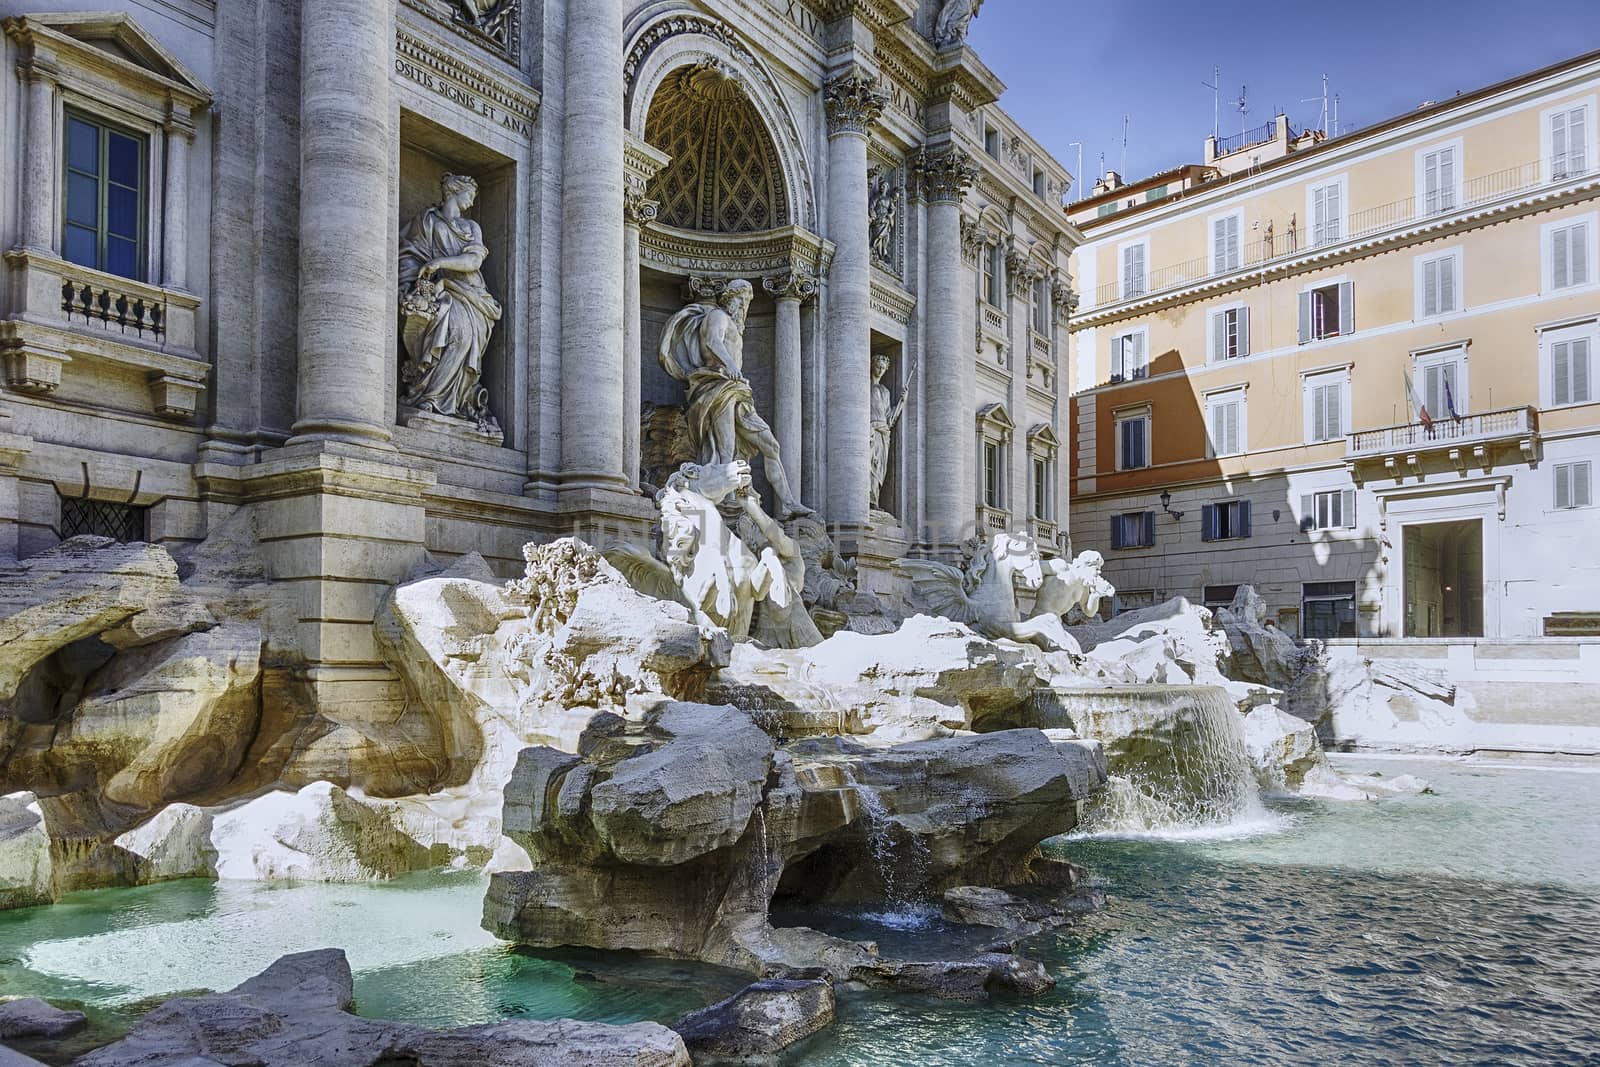 Trevi Fountain, iconic landmark in the centre of Rome, Italy by marcorubino